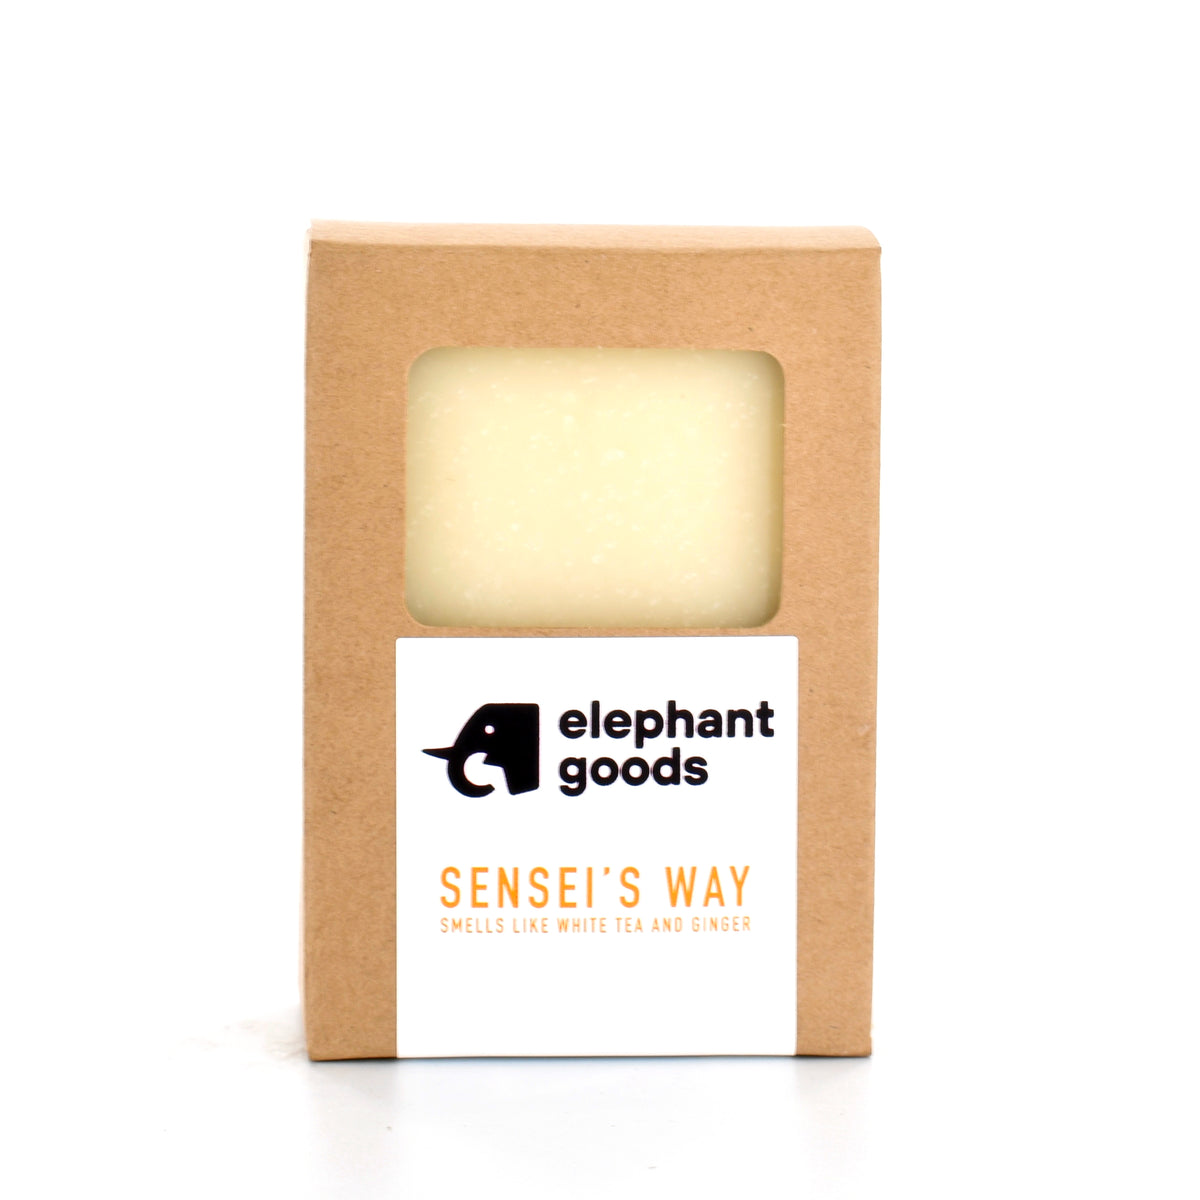 Sensei's Way Bar Soap by Elephant Goods